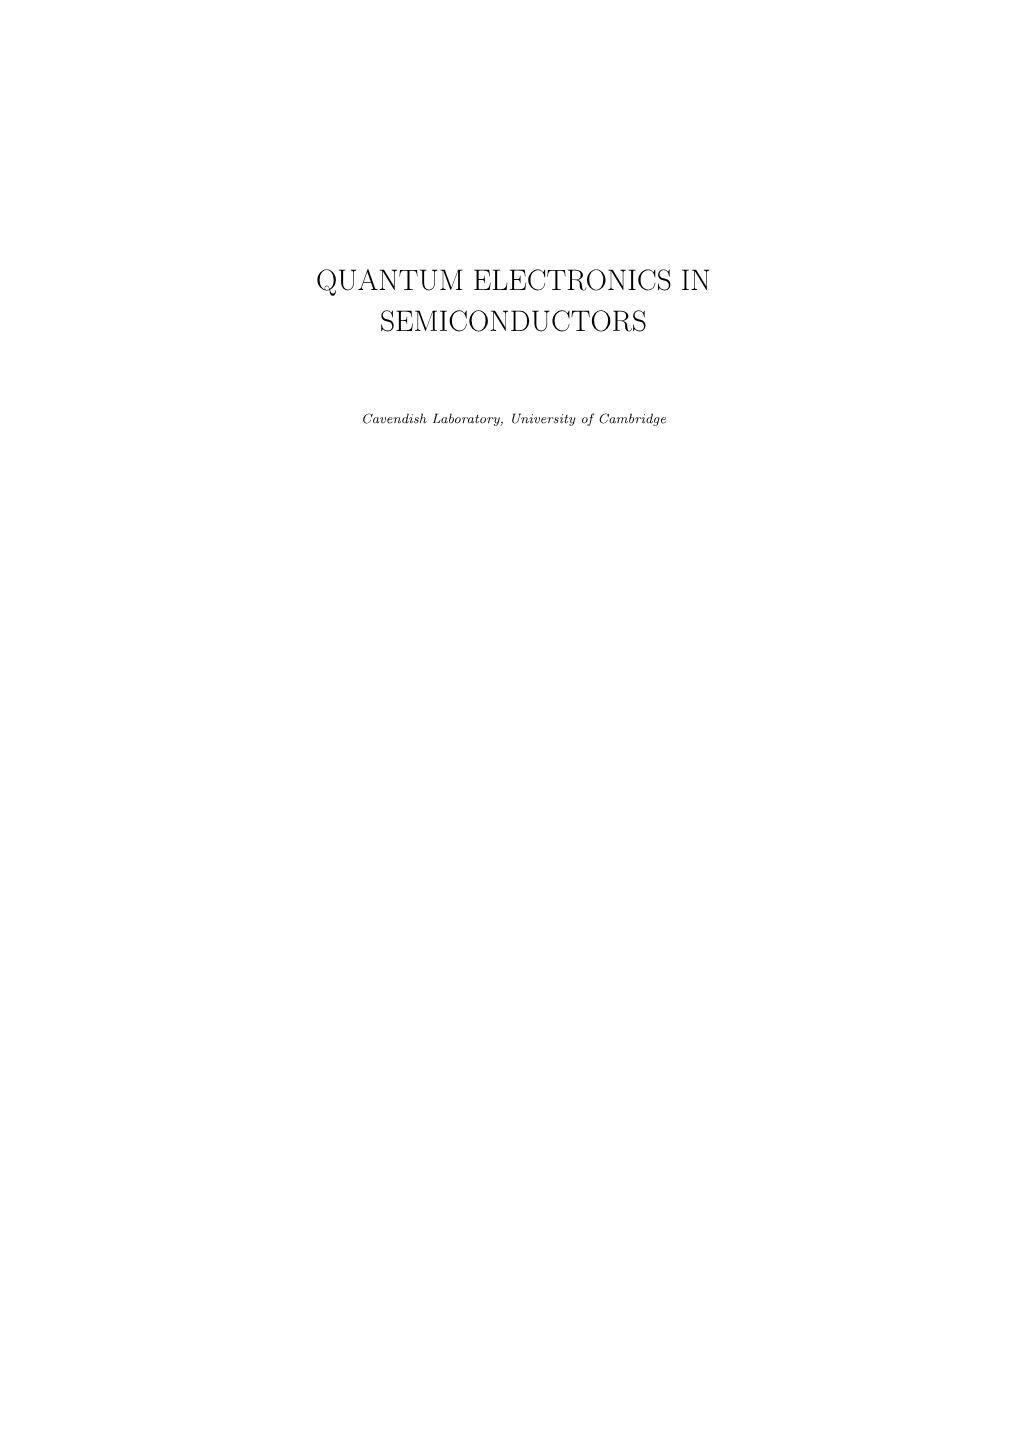 Quantum Electronics in Semiconductors